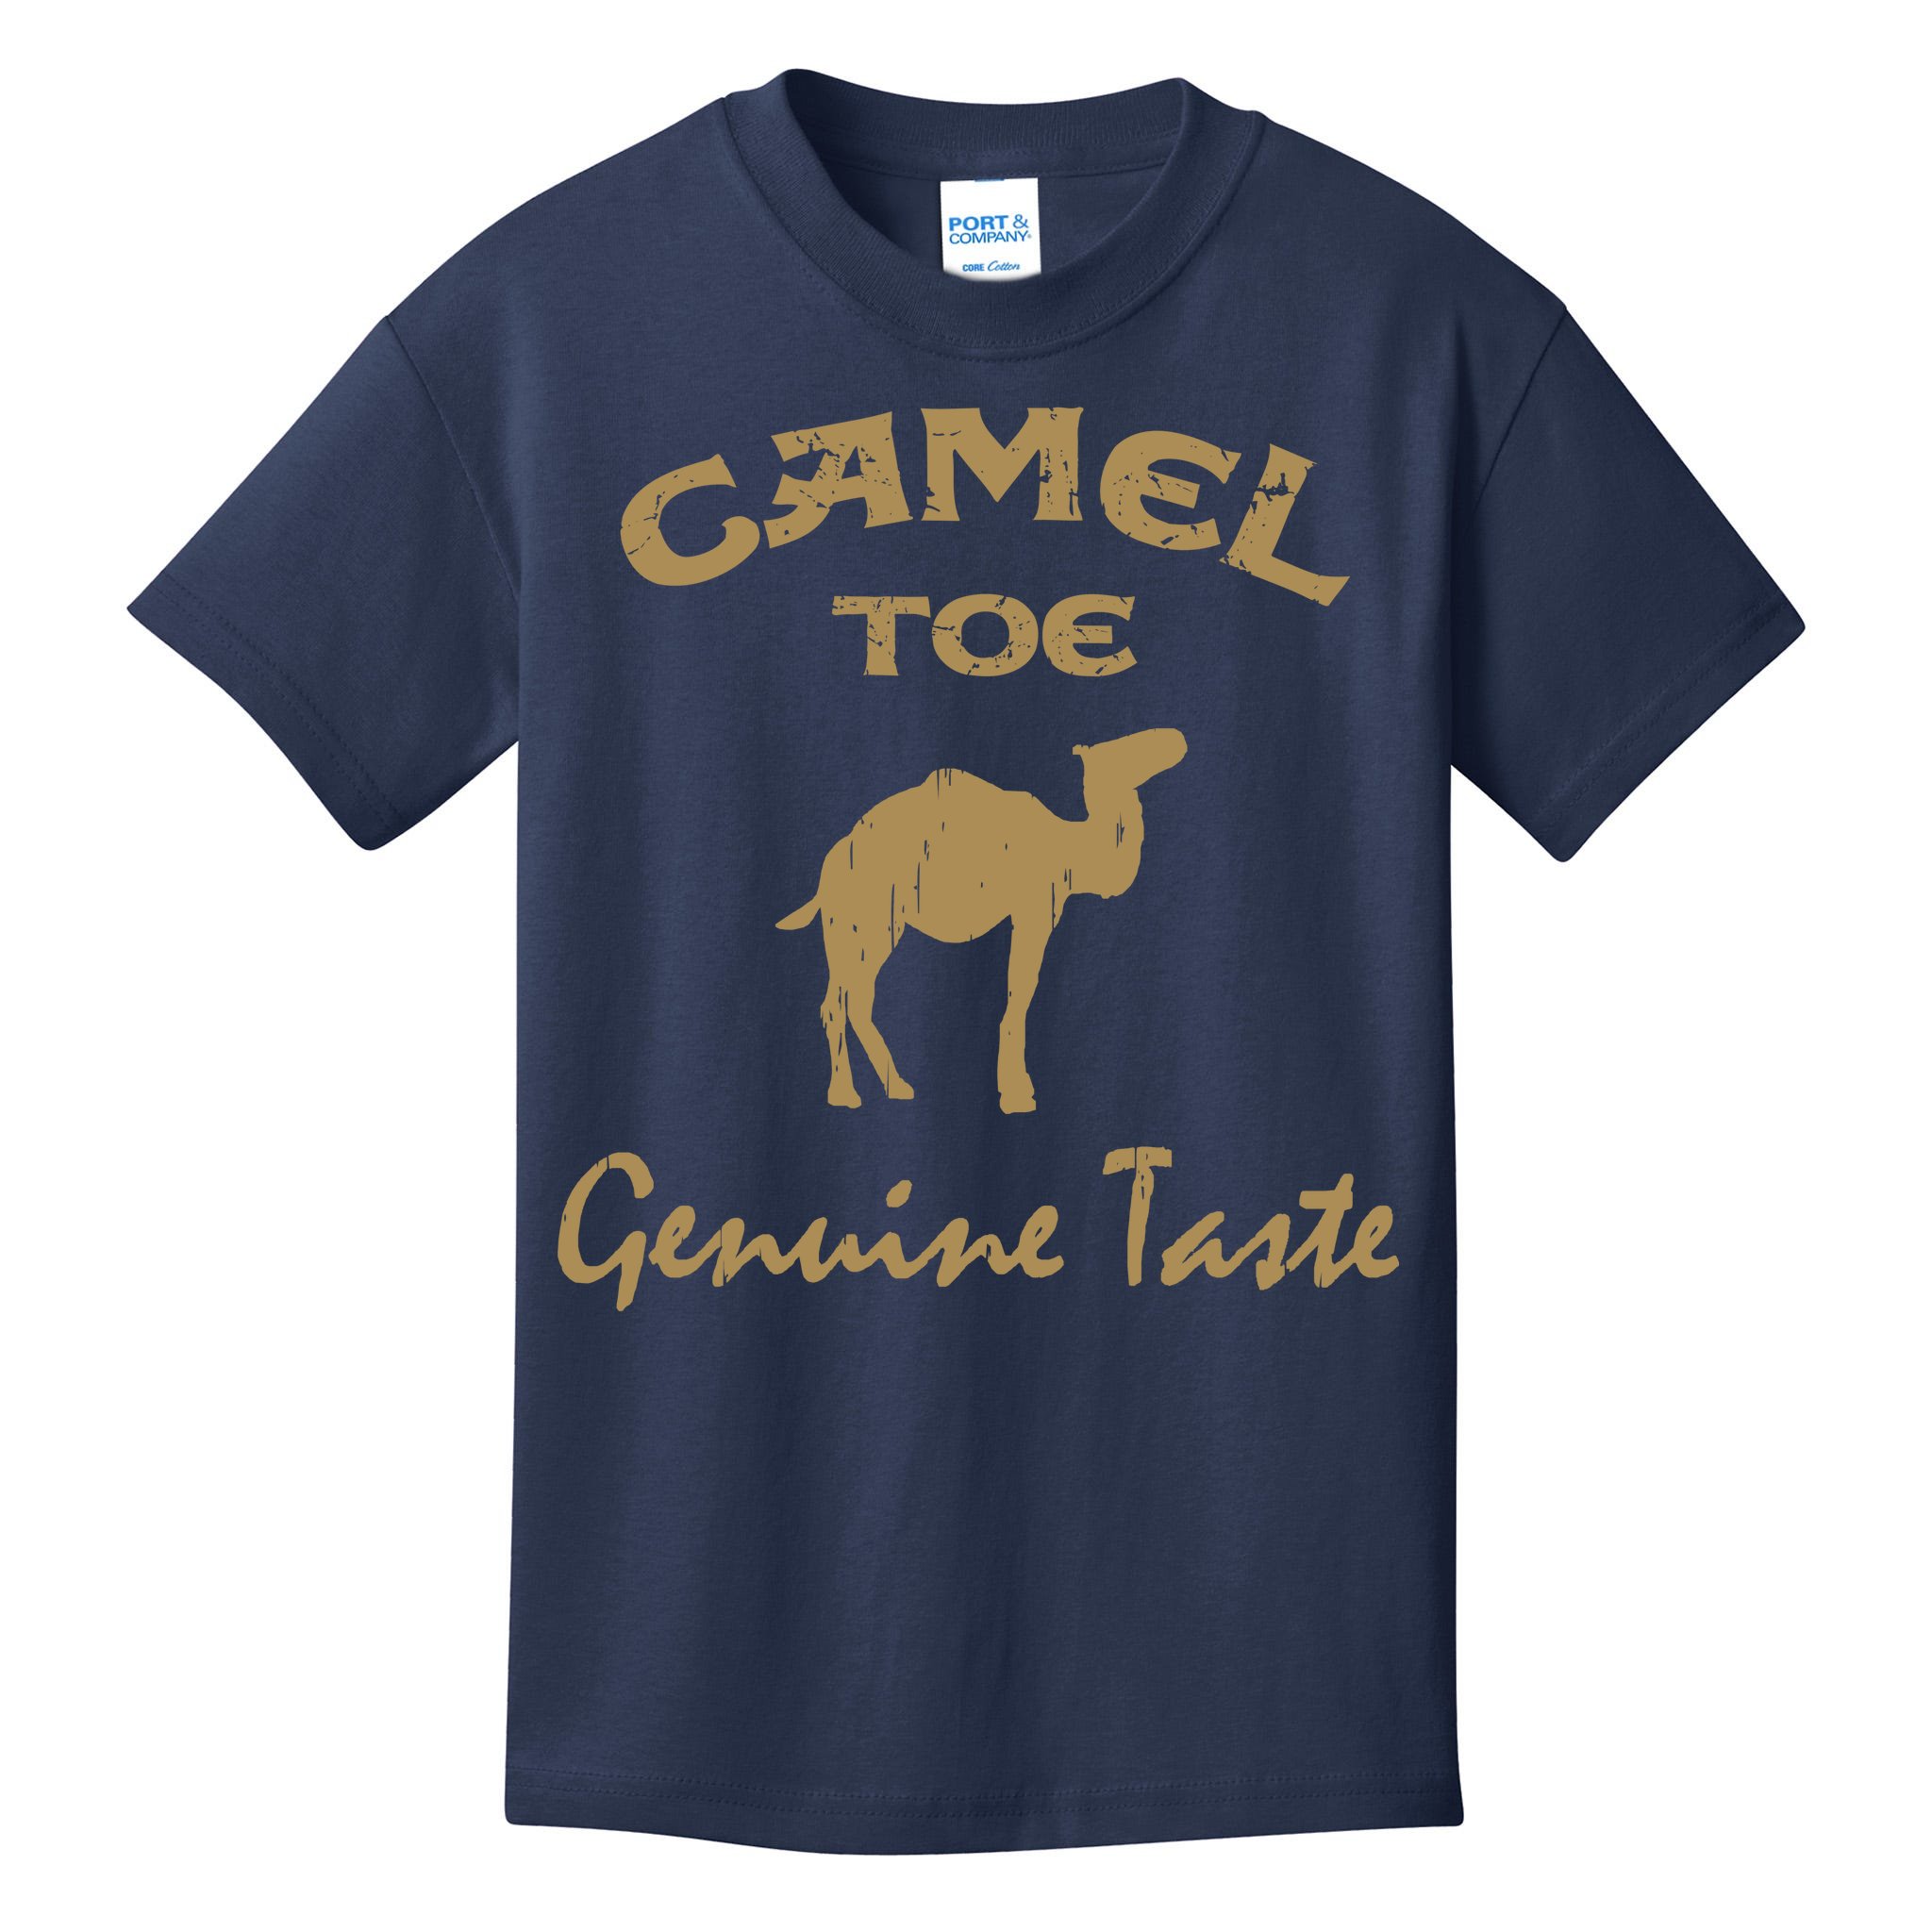 Custom Dont' Look At My Camel Toe Funny Cameltoe Tee Saying Humor Long  Sleeve Shirts By Cm-arts - Artistshot